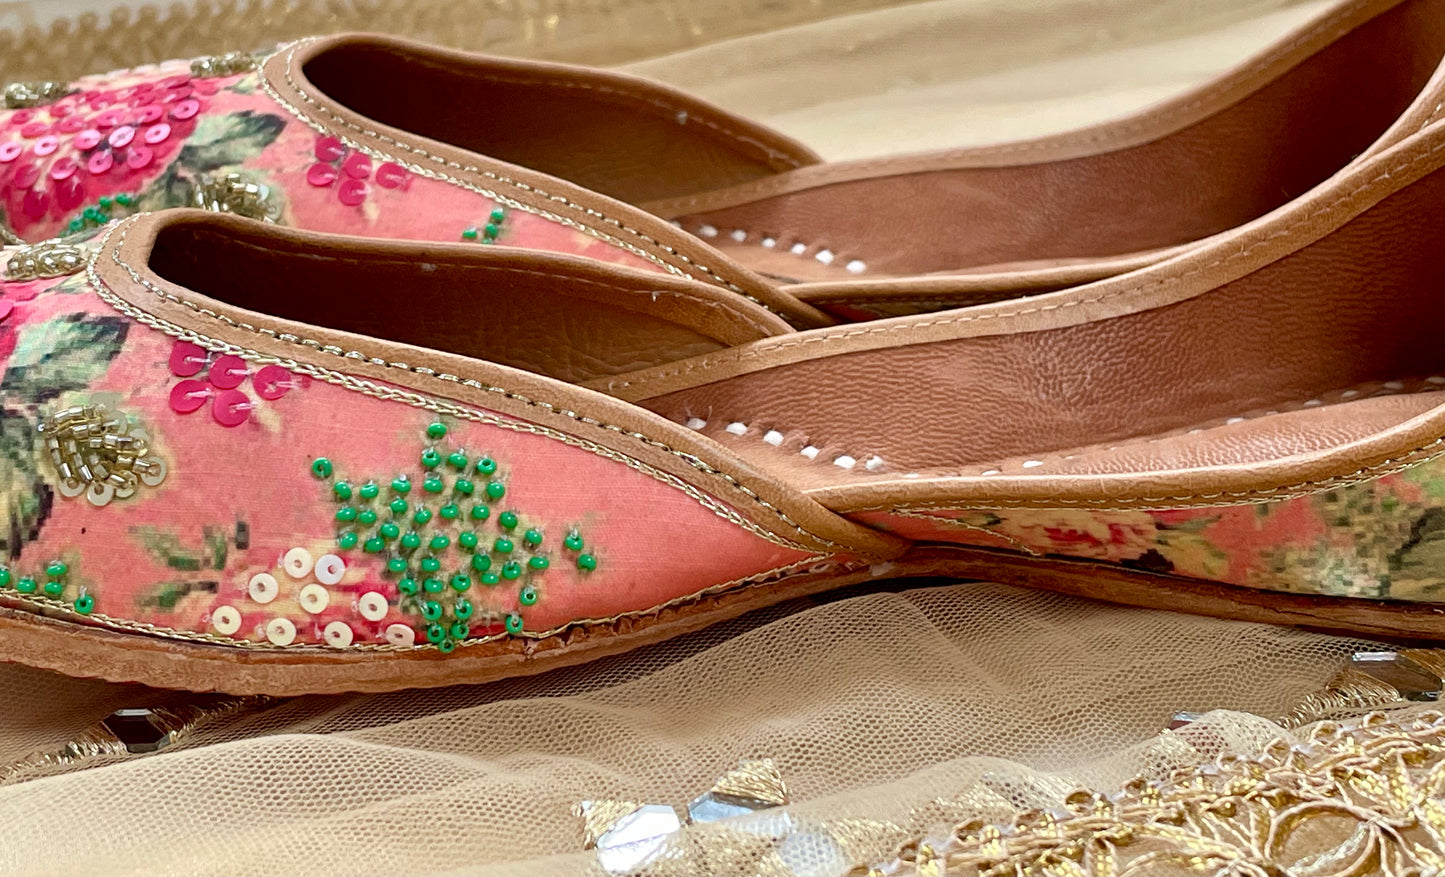 Peach Printed Floral Embroidered Summer Design Juttis Punjabi Jooti Women Shoes Khussa Embroidered pumps Bridal Shoes UK 4